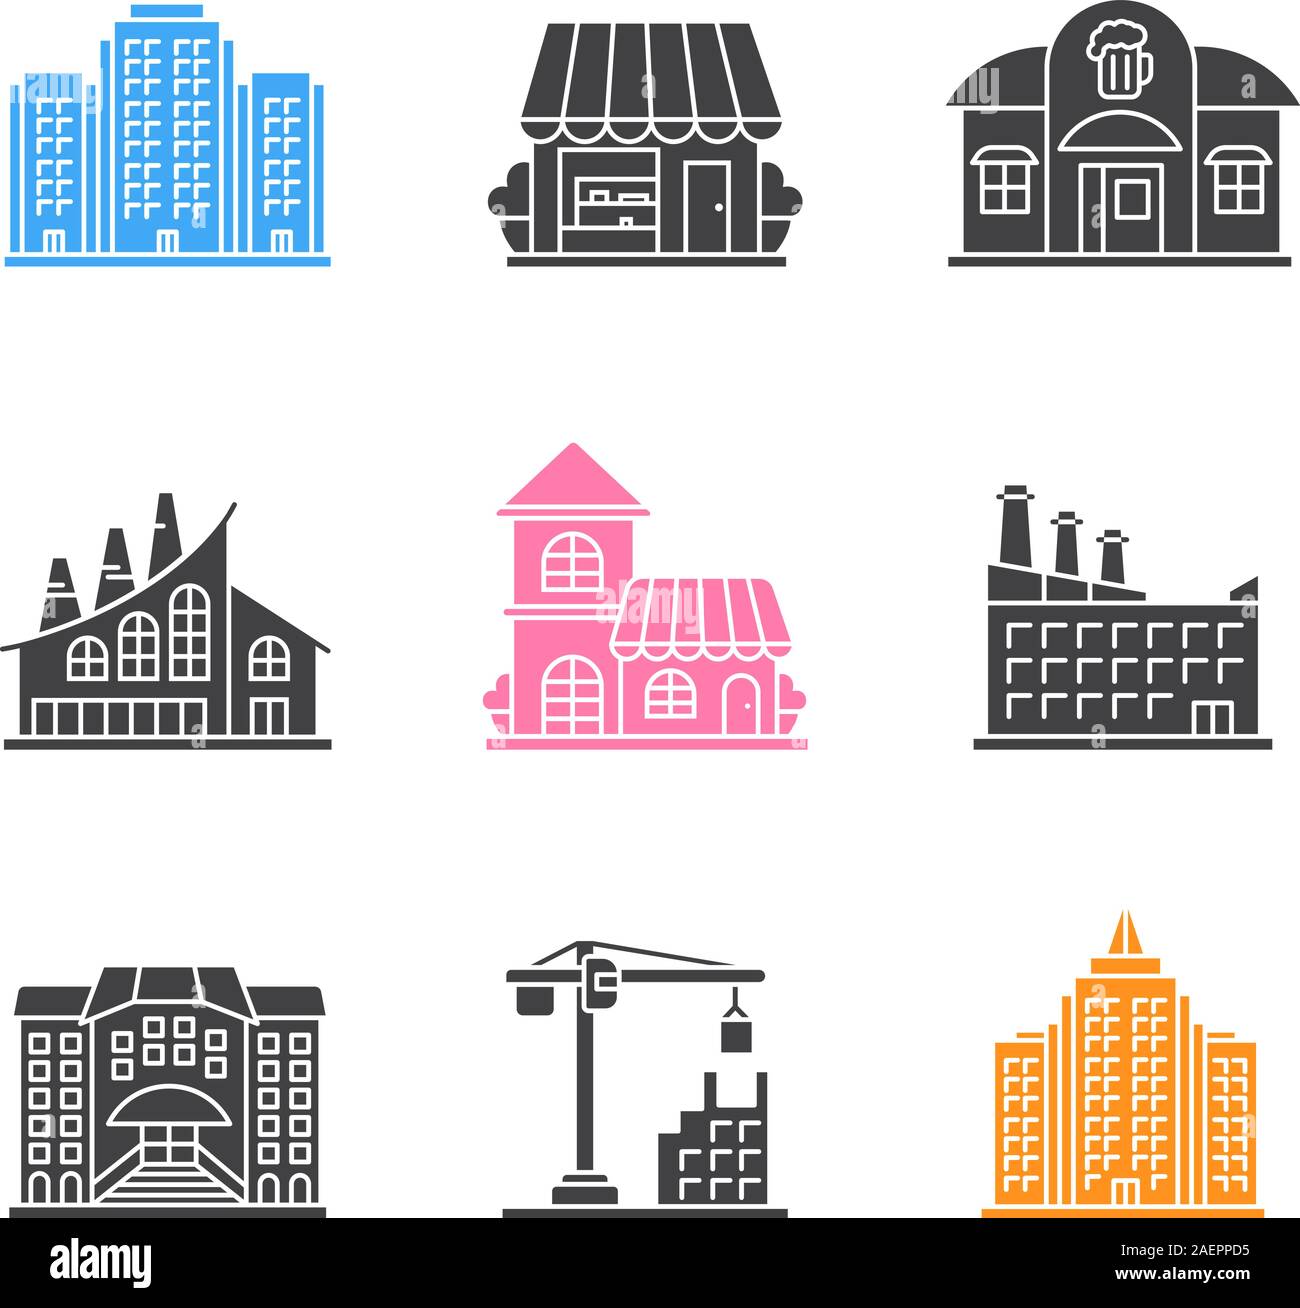 City buildings glyph icons set. Multi-storey building, shop, pub, industrial factory, cafe, hotel, university, tower crane, skyscraper. Silhouette sym Stock Vector